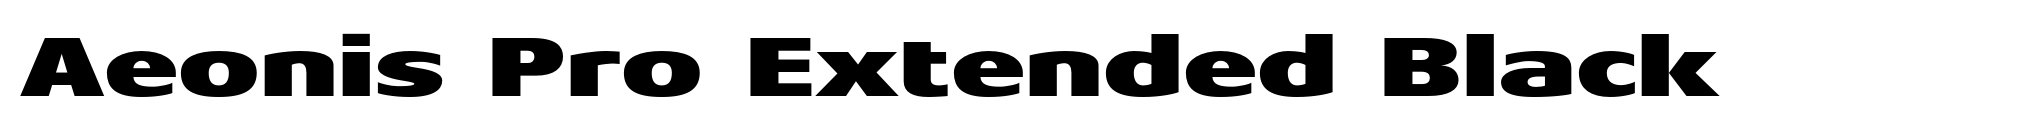 Aeonis Pro Extended Black image